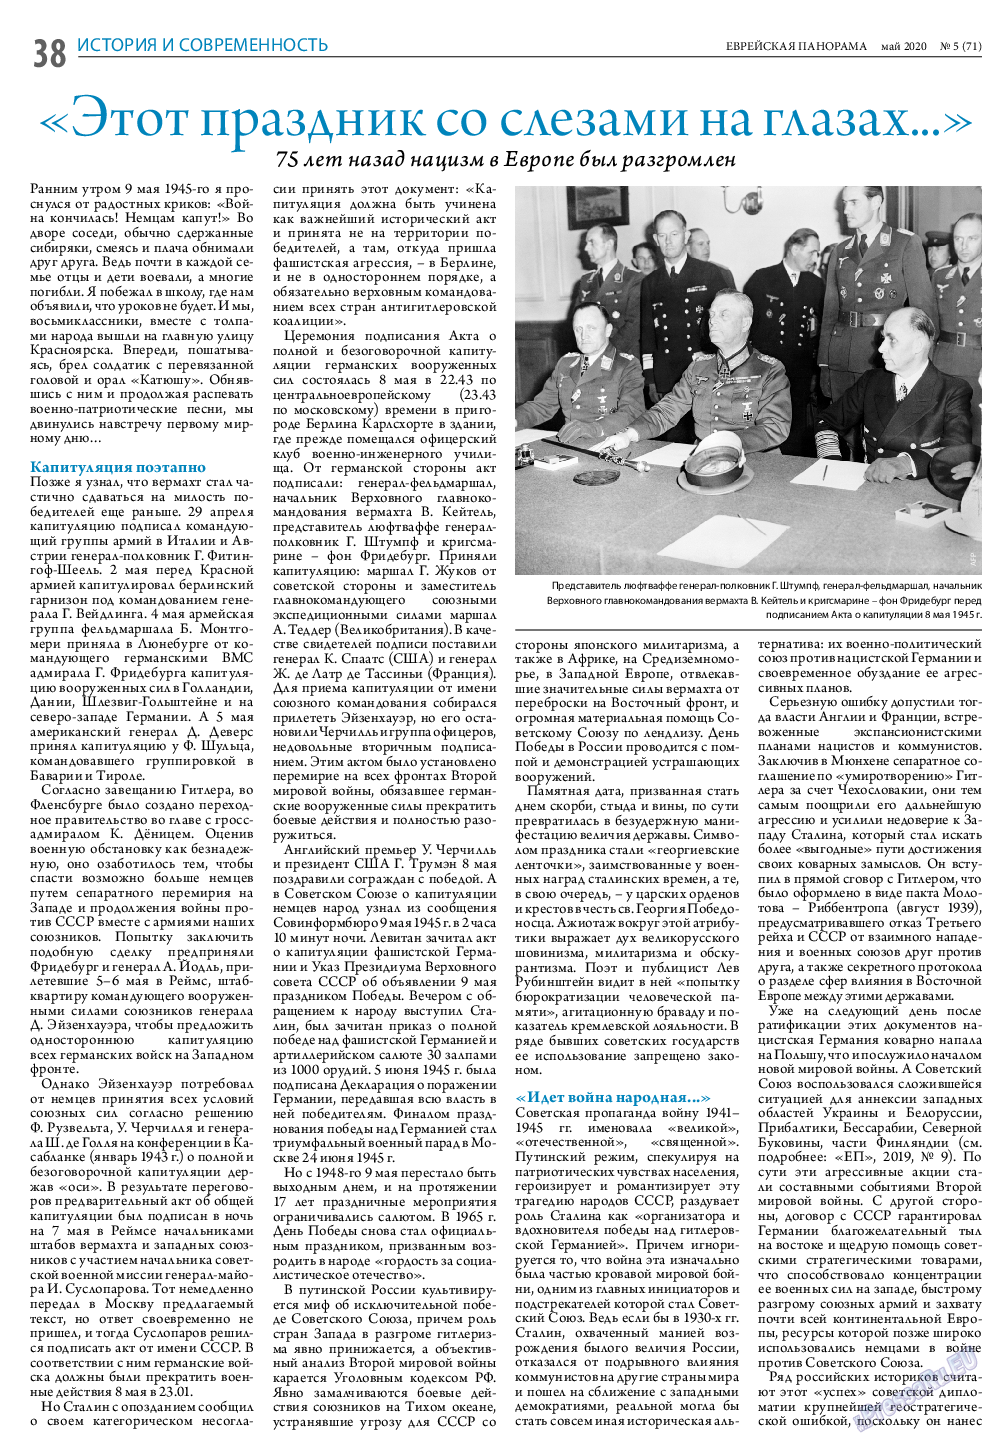 Еврейская панорама, газета. 2020 №5 стр.38